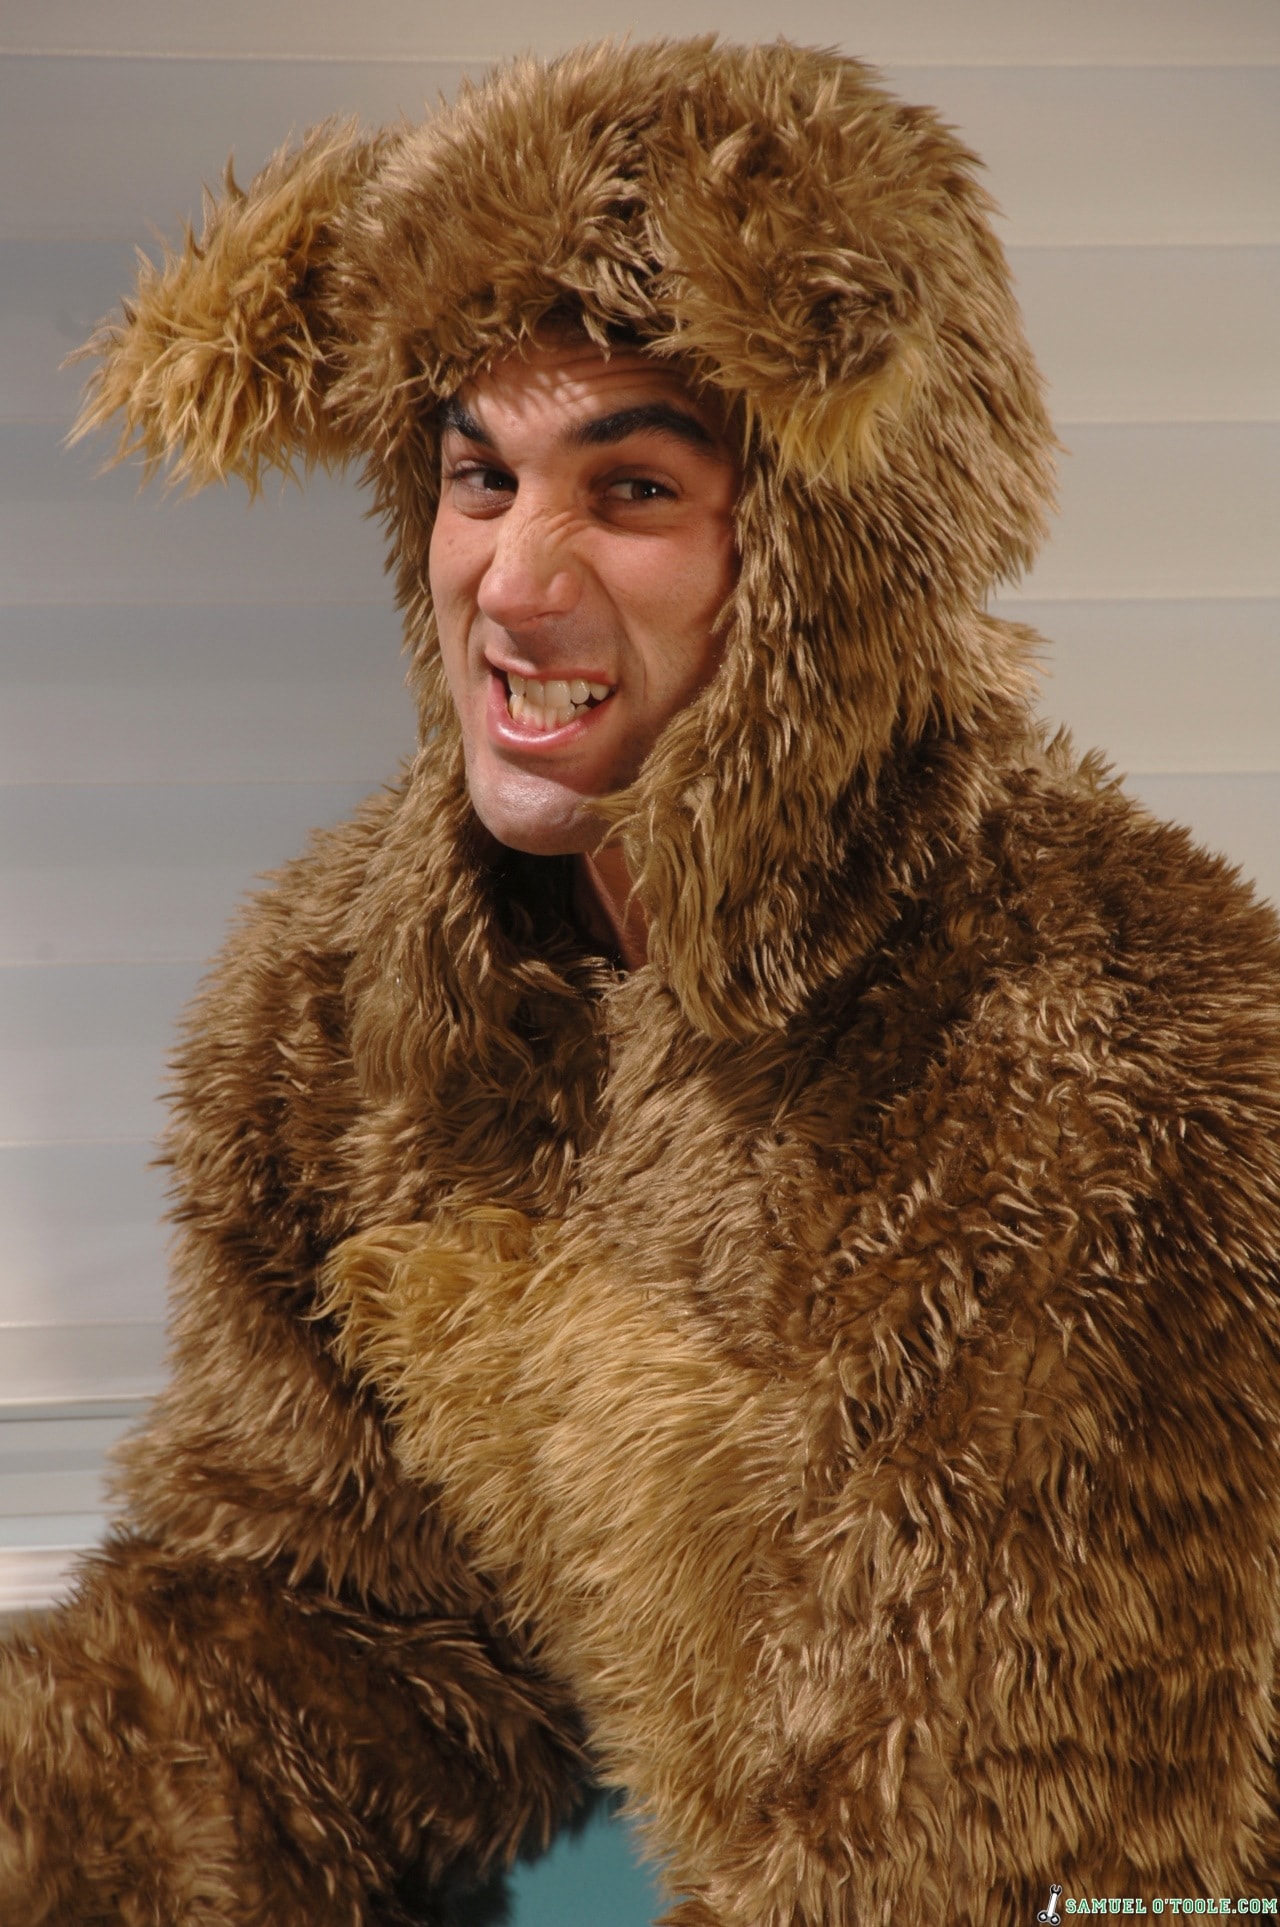 Next Door Studios 'Bearly Fur Real' starring Samuel O'Toole (Photo 2)